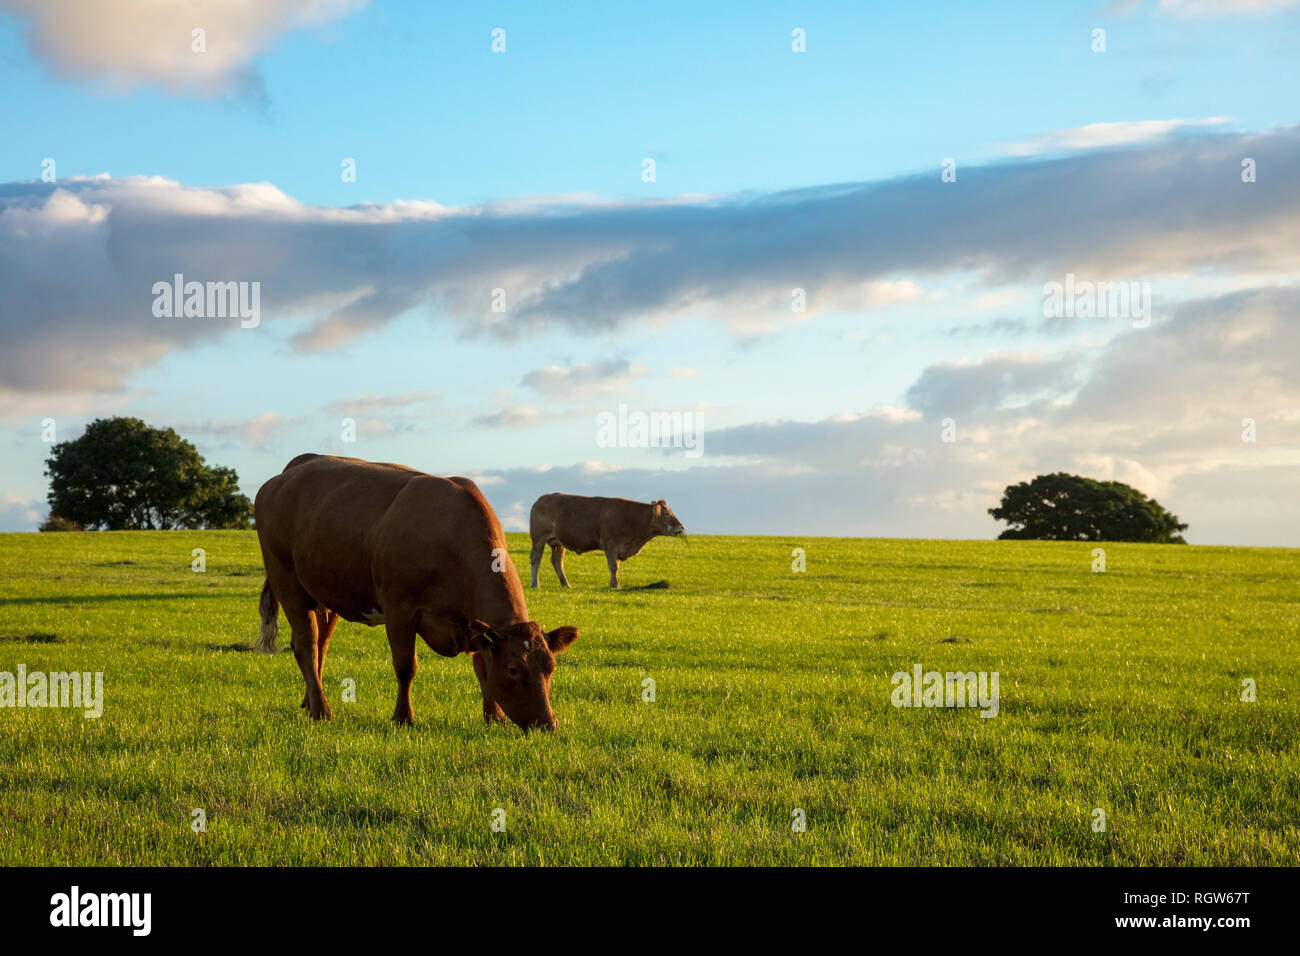 Evening cattle grazing in a field, County Sligo, Ireland. Stock Photo